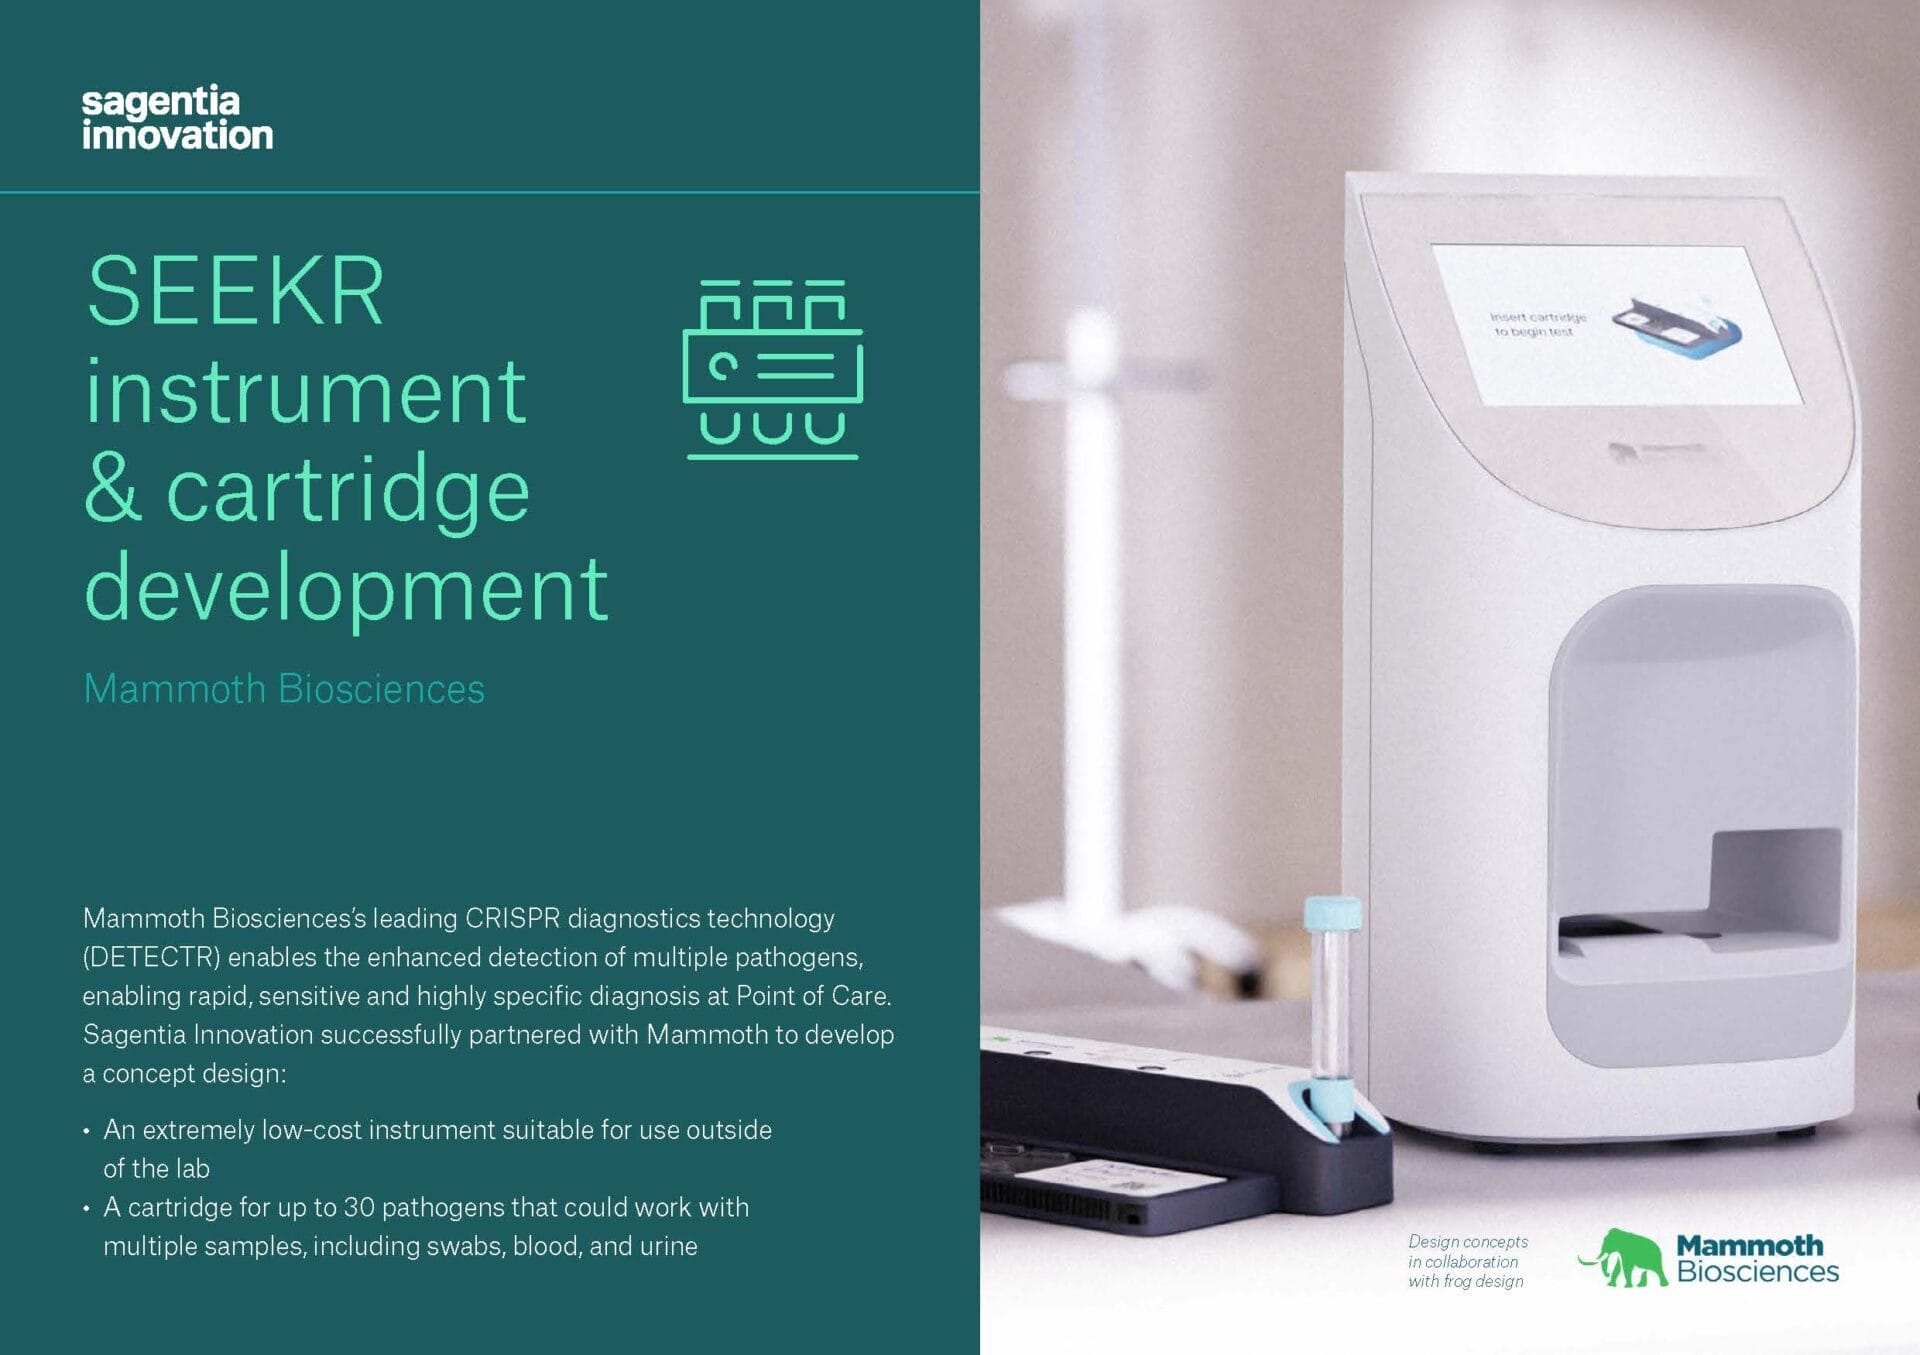 SEEKR diagnostics instrument and cartridge development